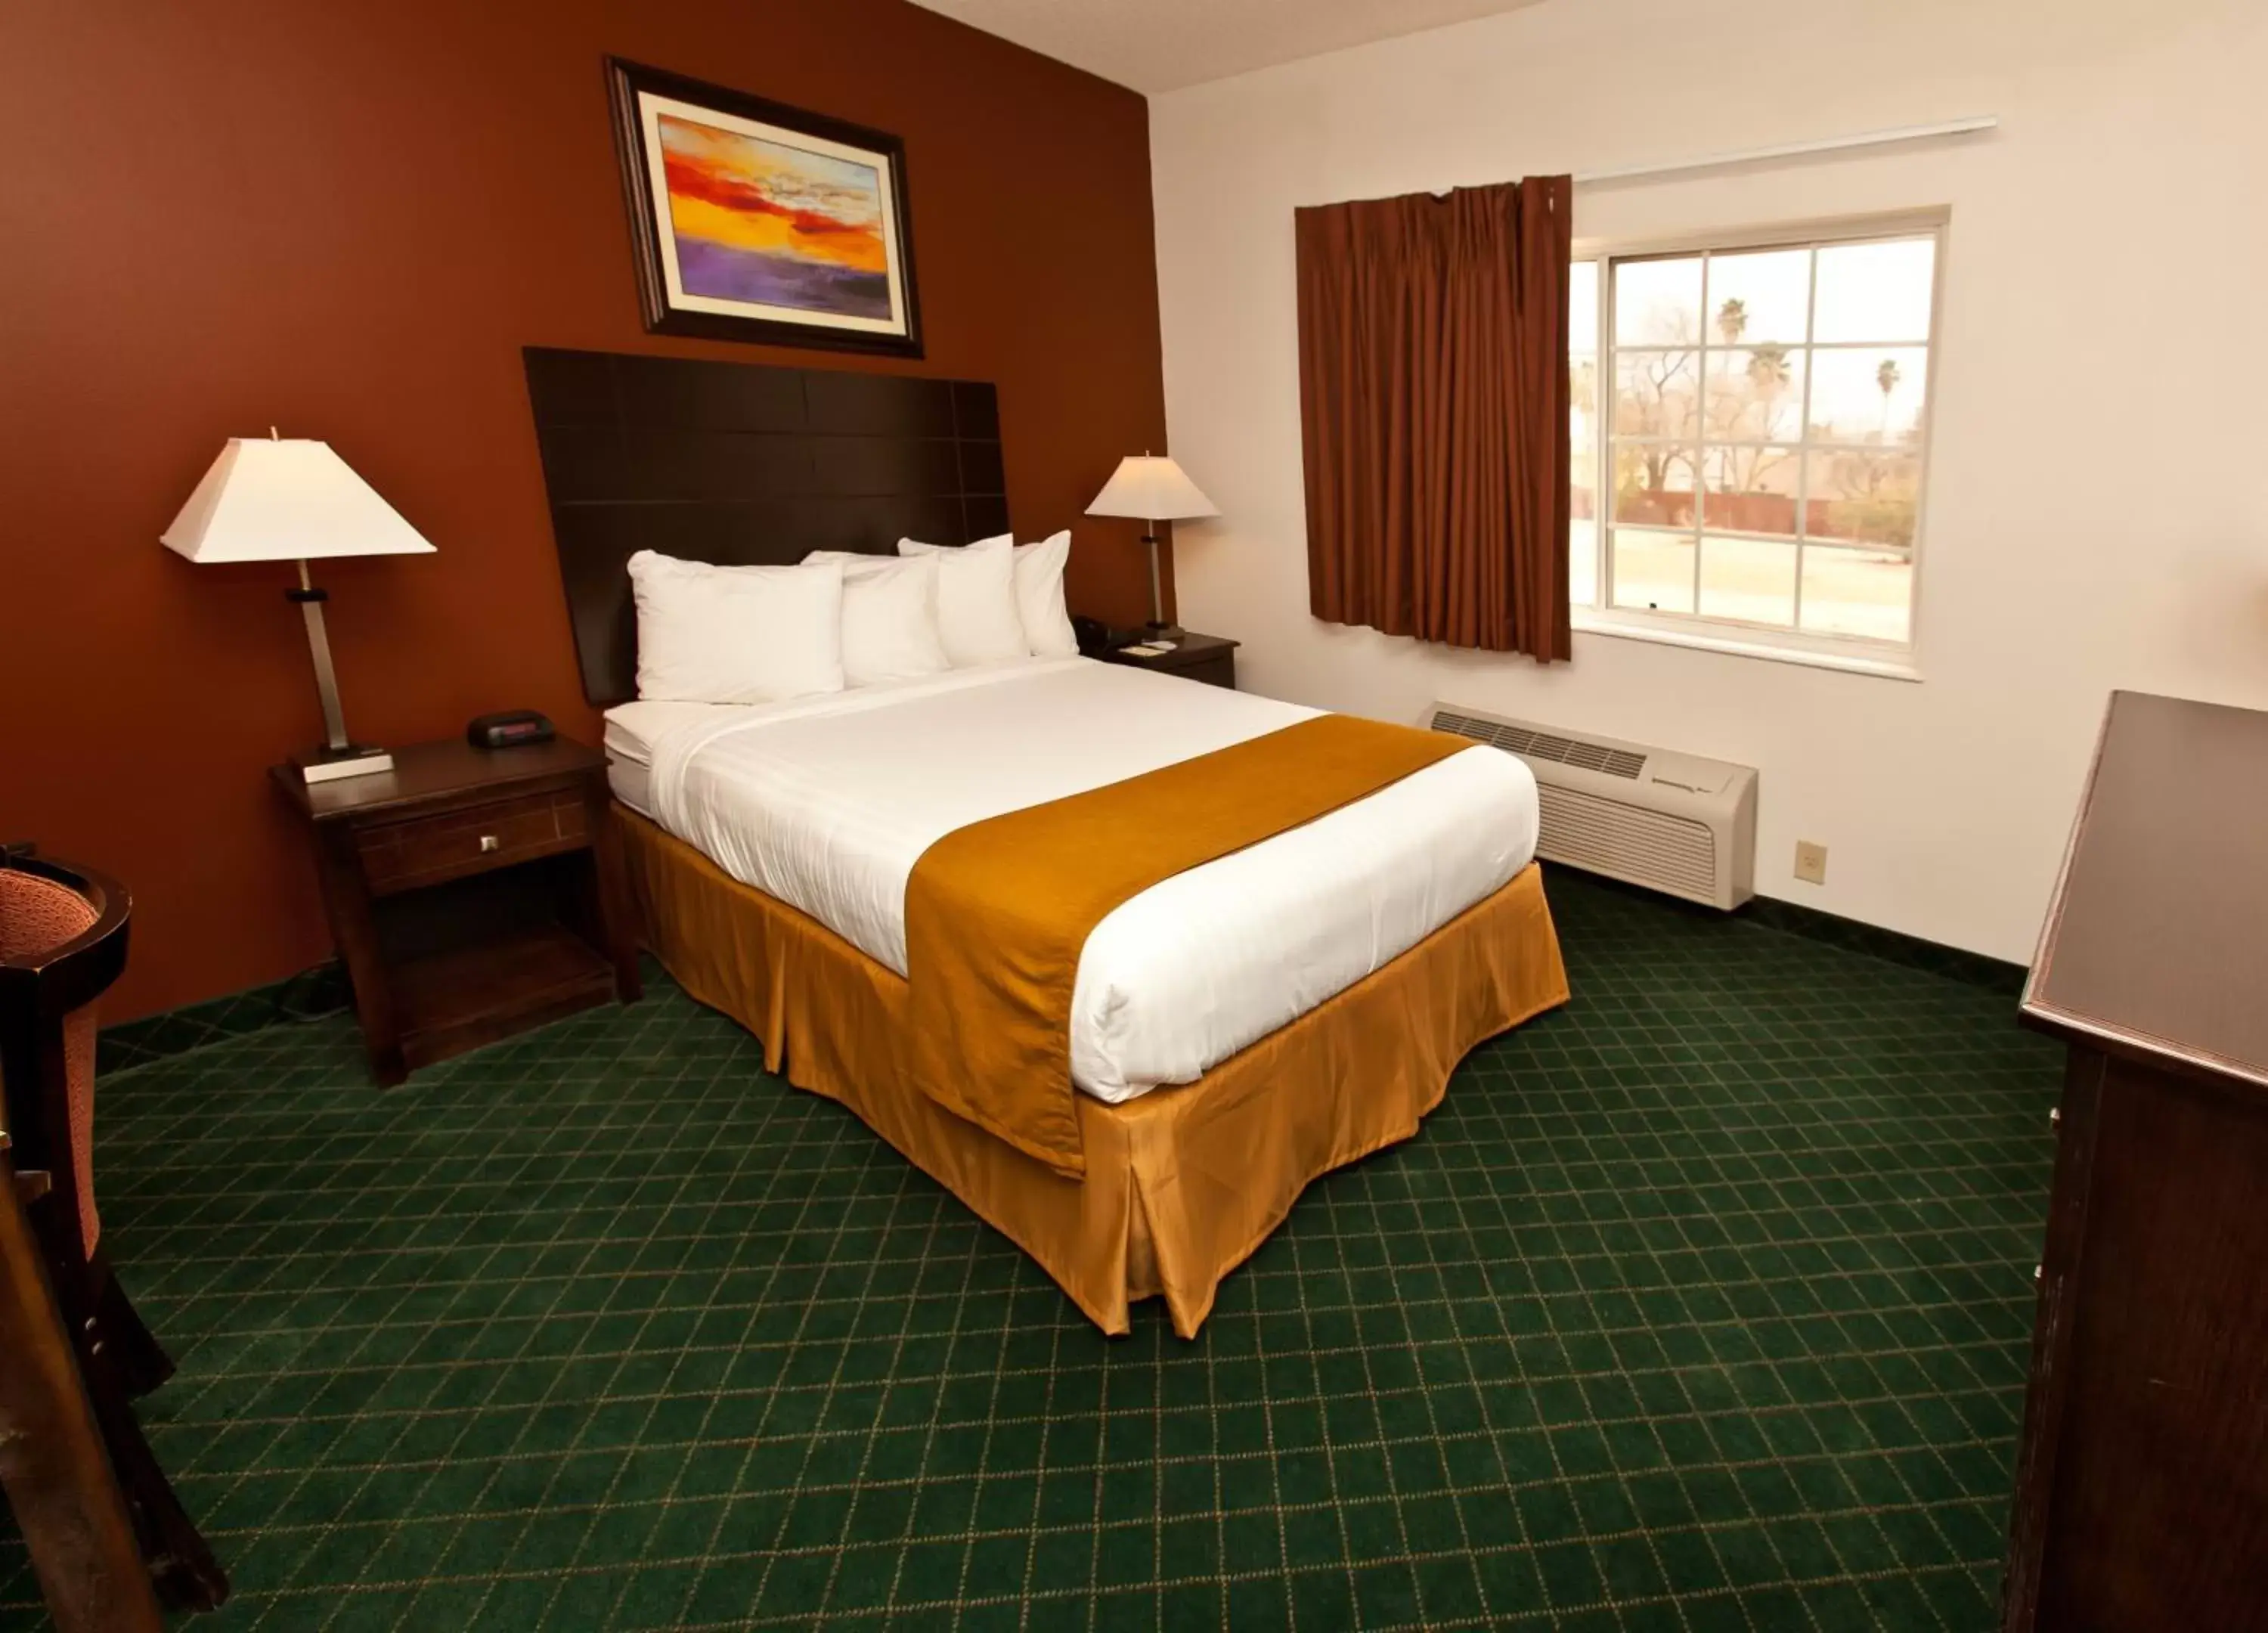 Bedroom, Room Photo in Landmark Inn Fort Irwin